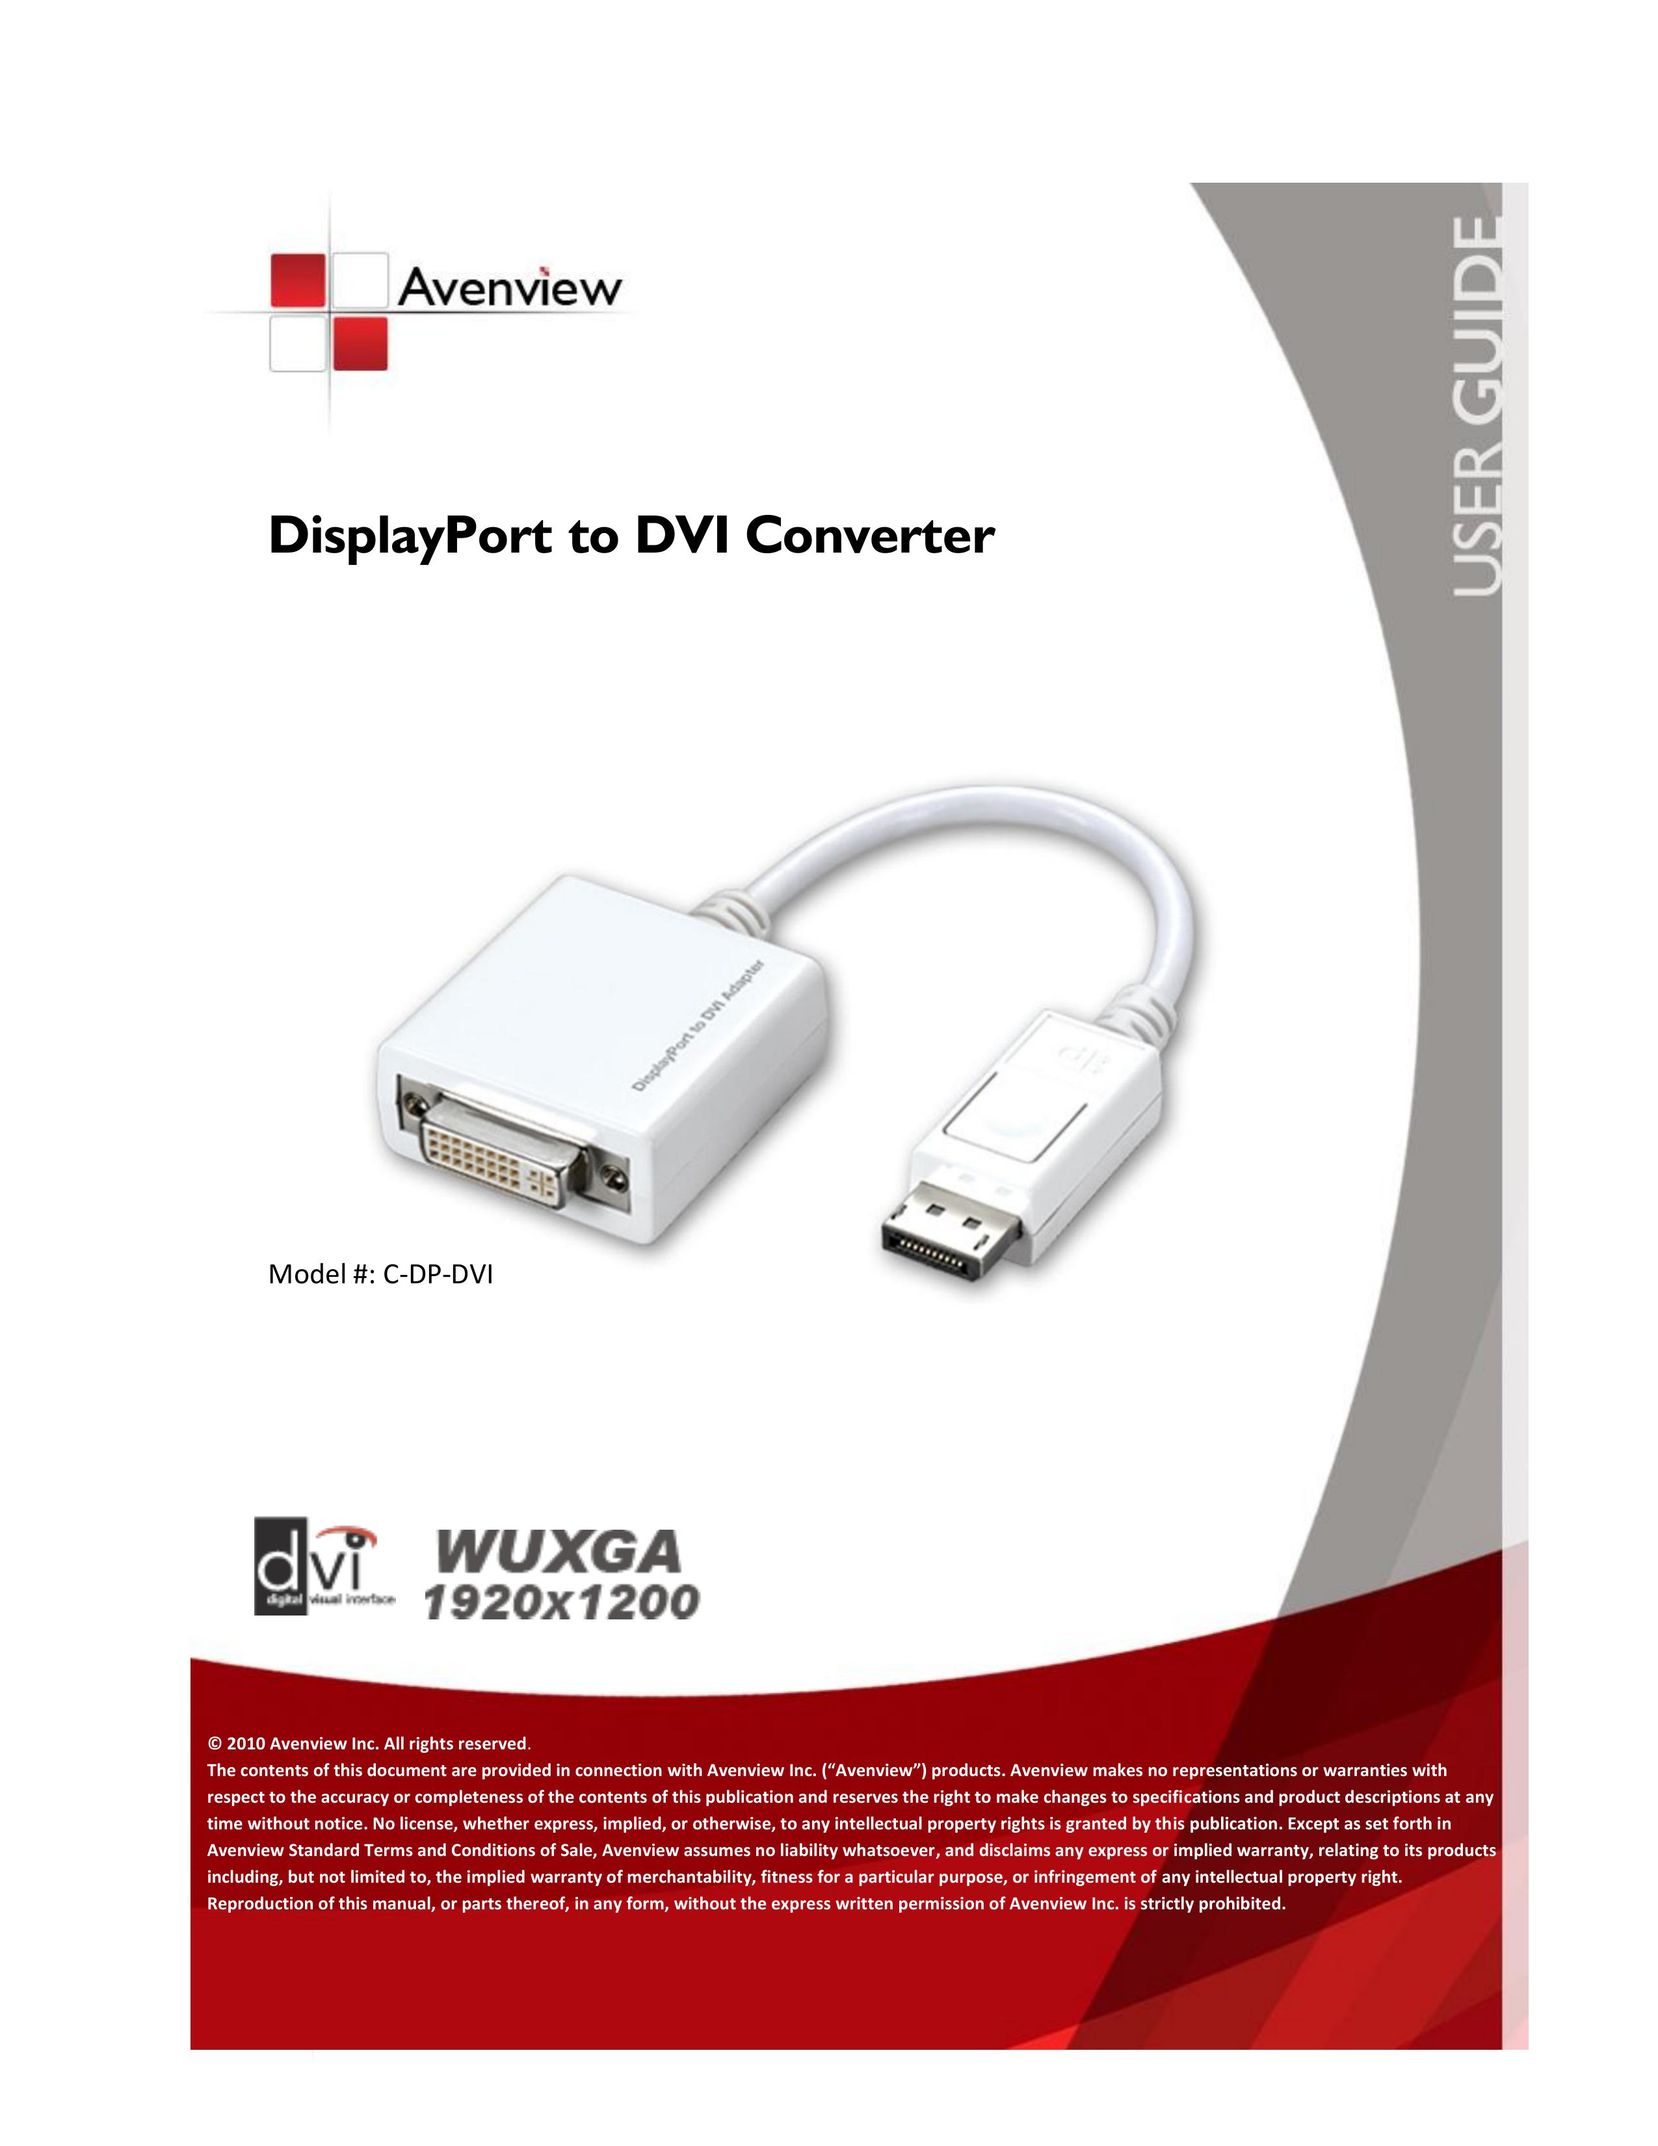 Avenview C-DP-DVI Cable Box User Manual